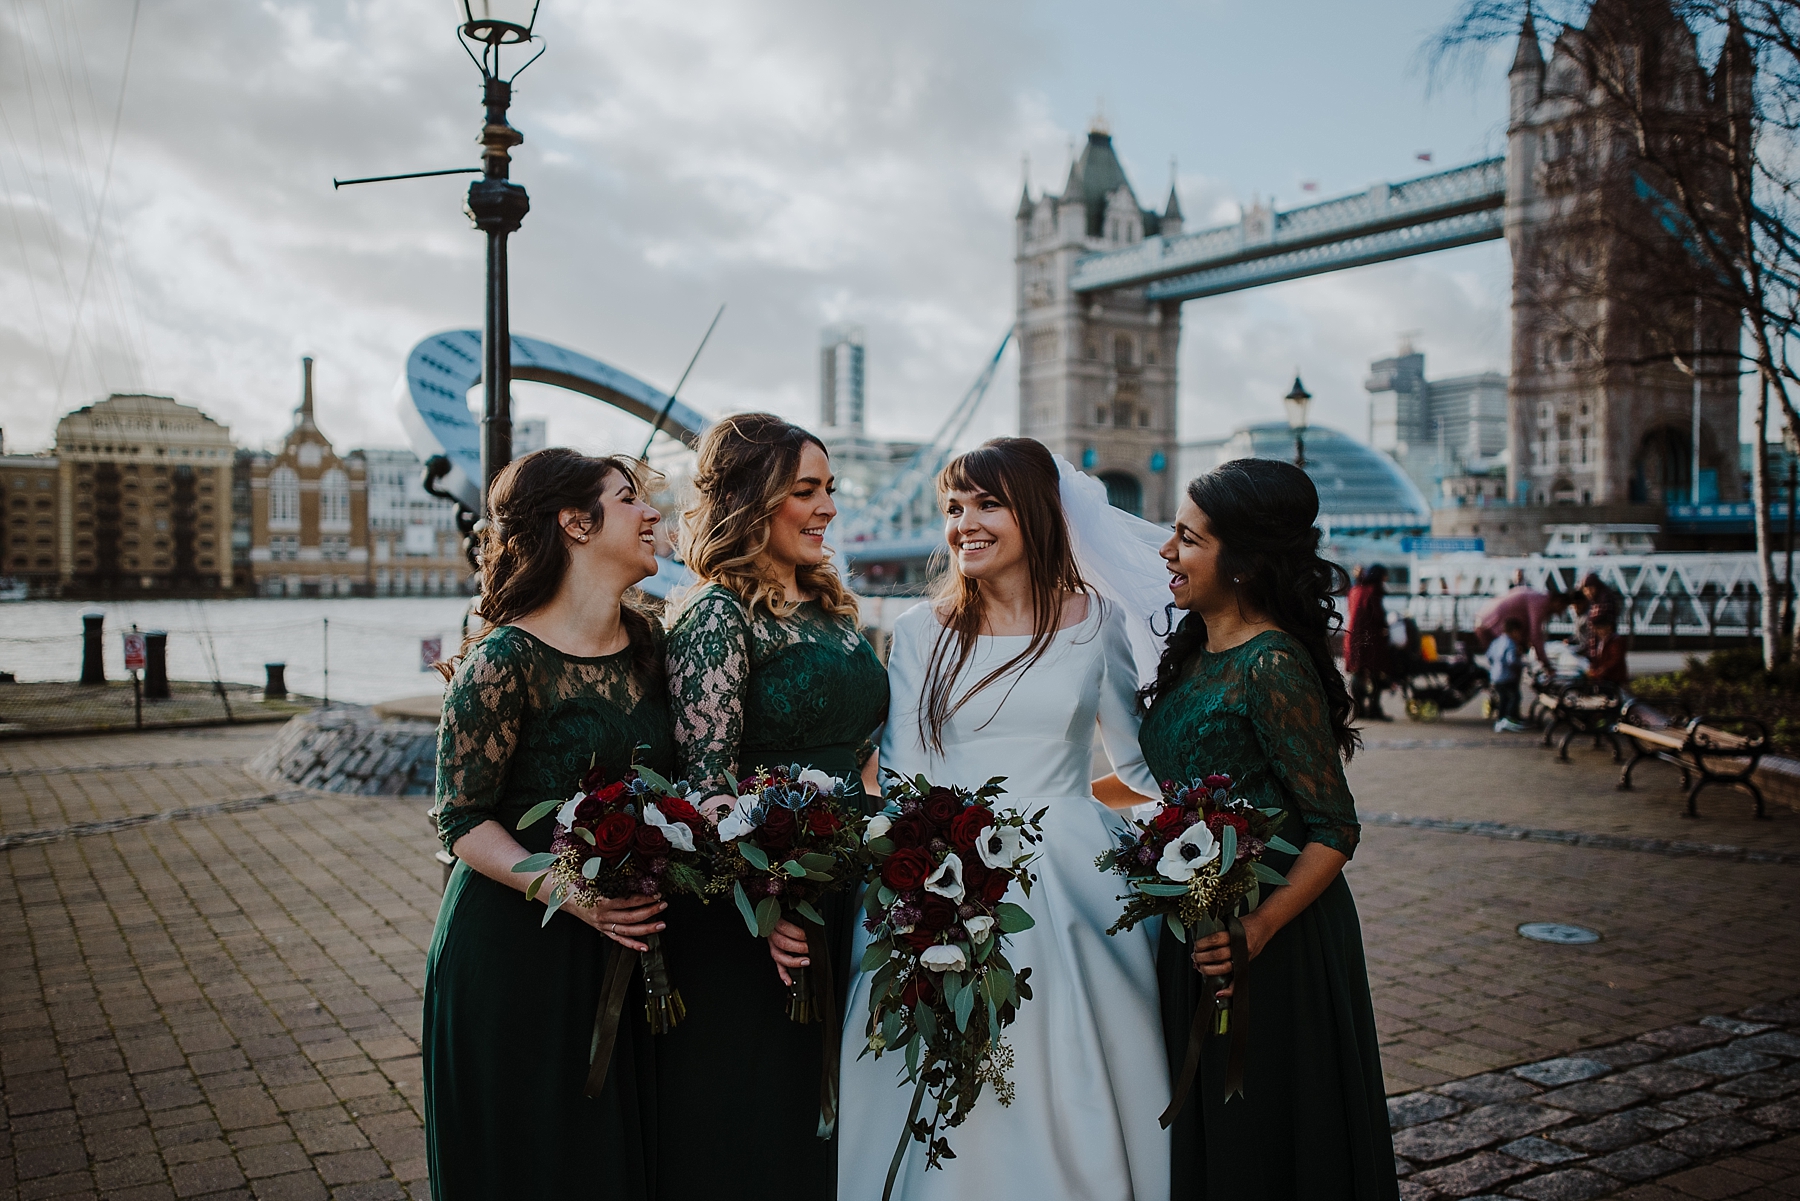 Wedding photographer in London, Kent, Surrey and Essex.